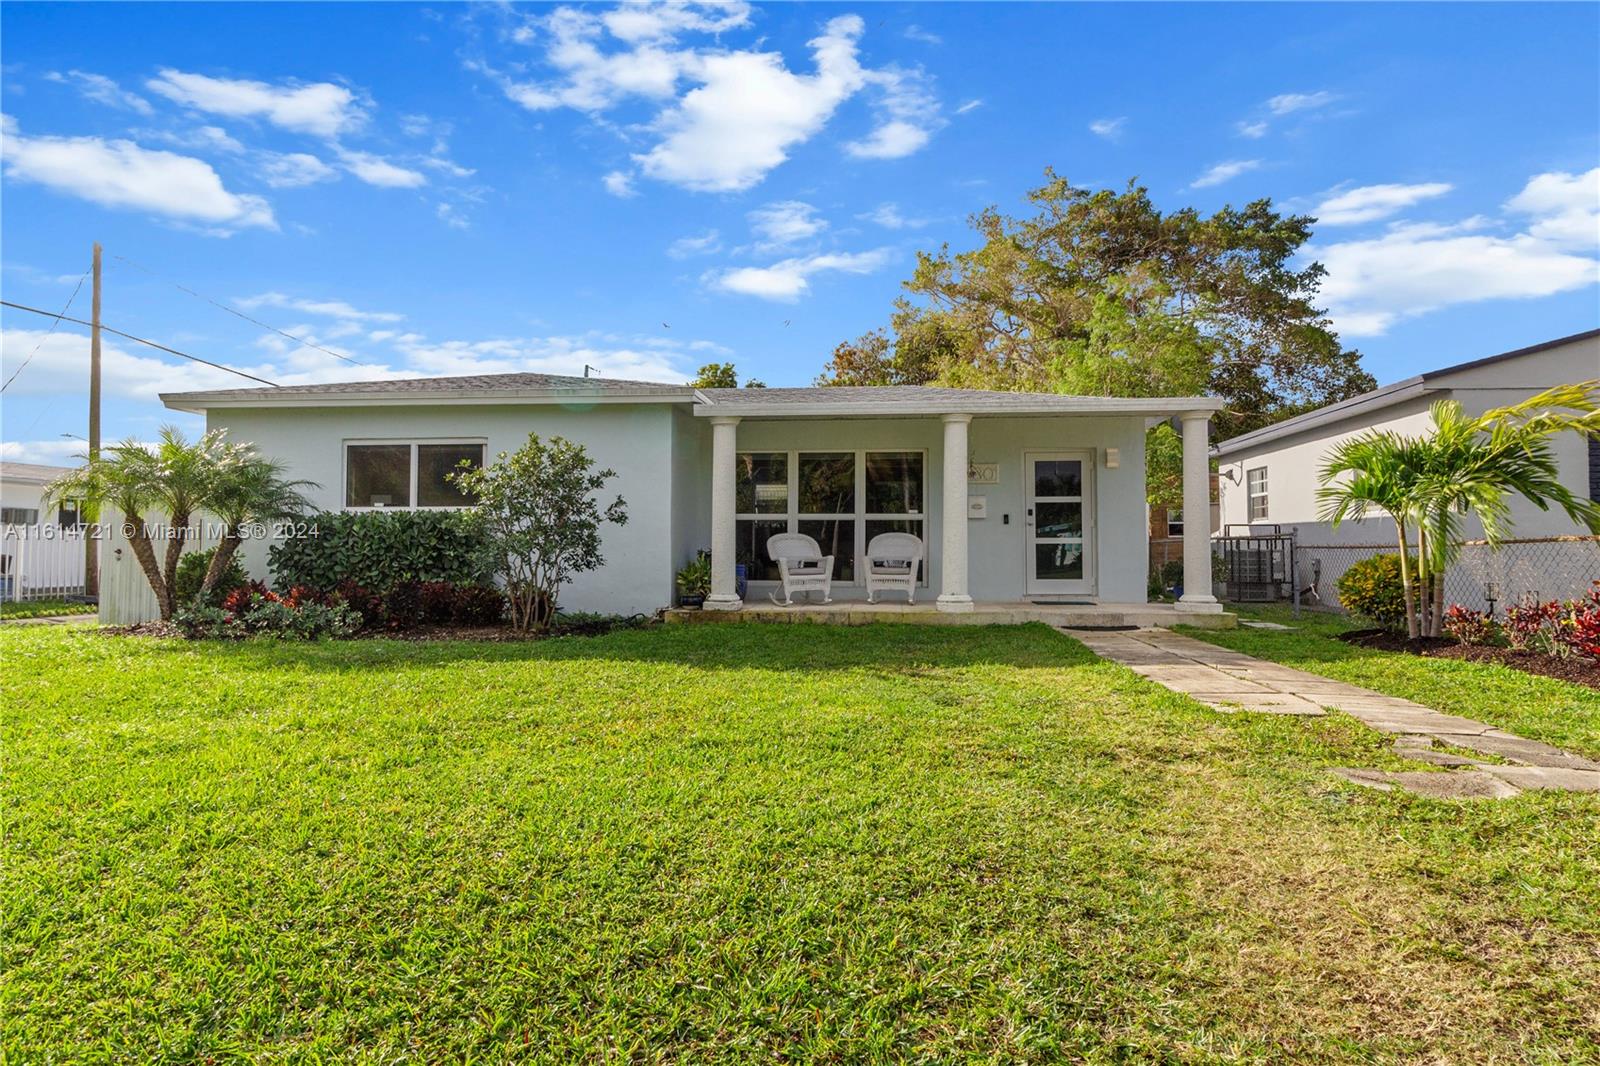 Property for Sale at 1780 Ne 170th St, North Miami Beach, Miami-Dade County, Florida - Bedrooms: 2 
Bathrooms: 1  - $499,999